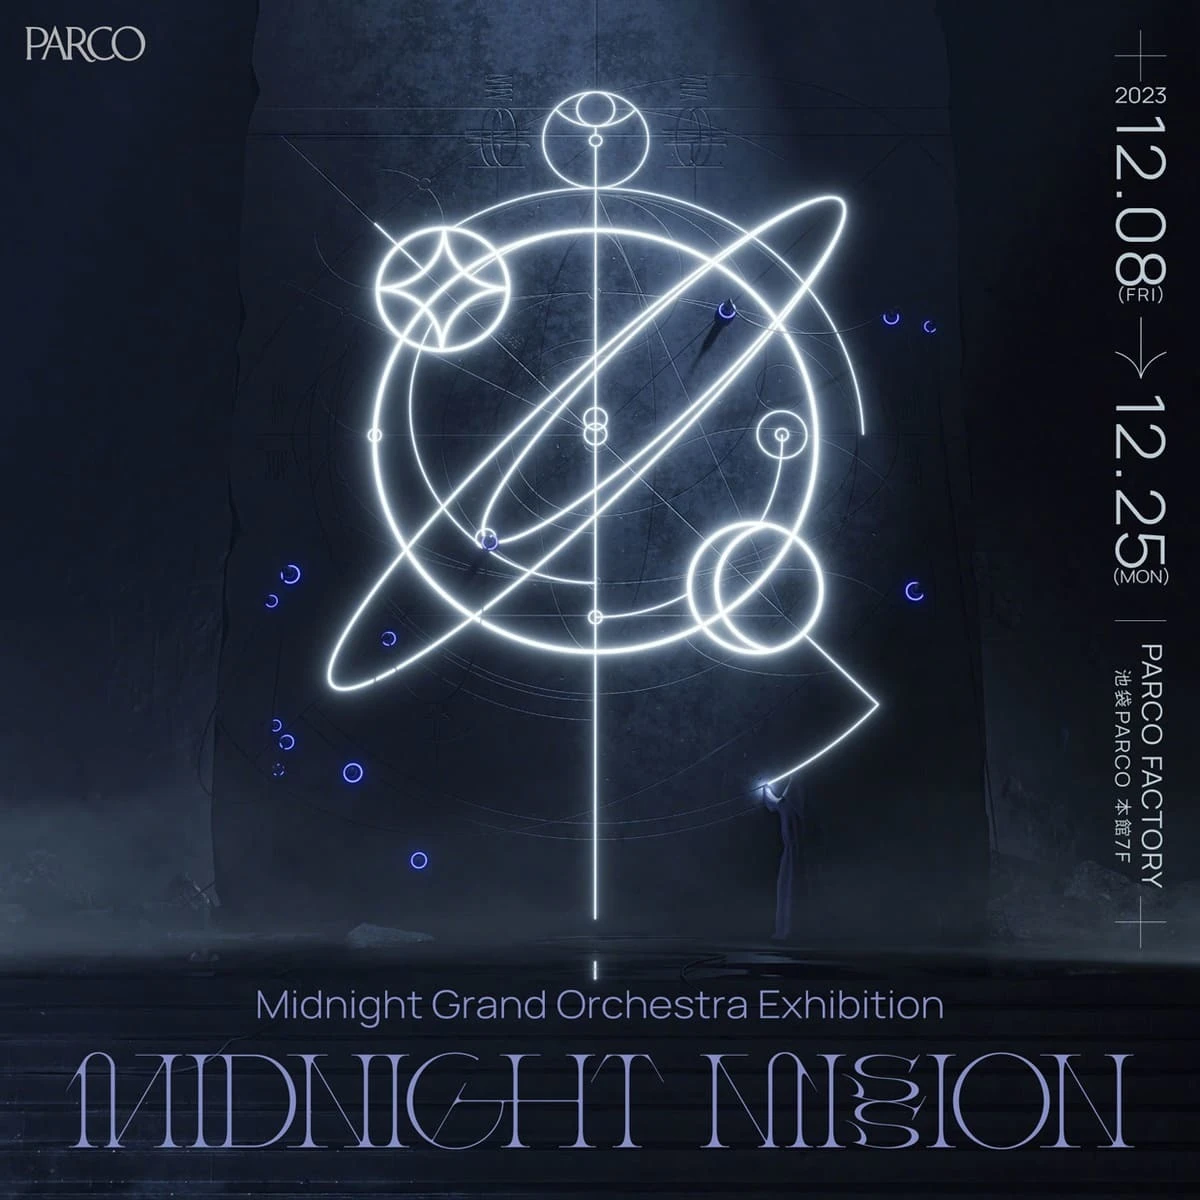 Midnight Grand Orchestraの展覧会「MIDNIGHT MISSION」